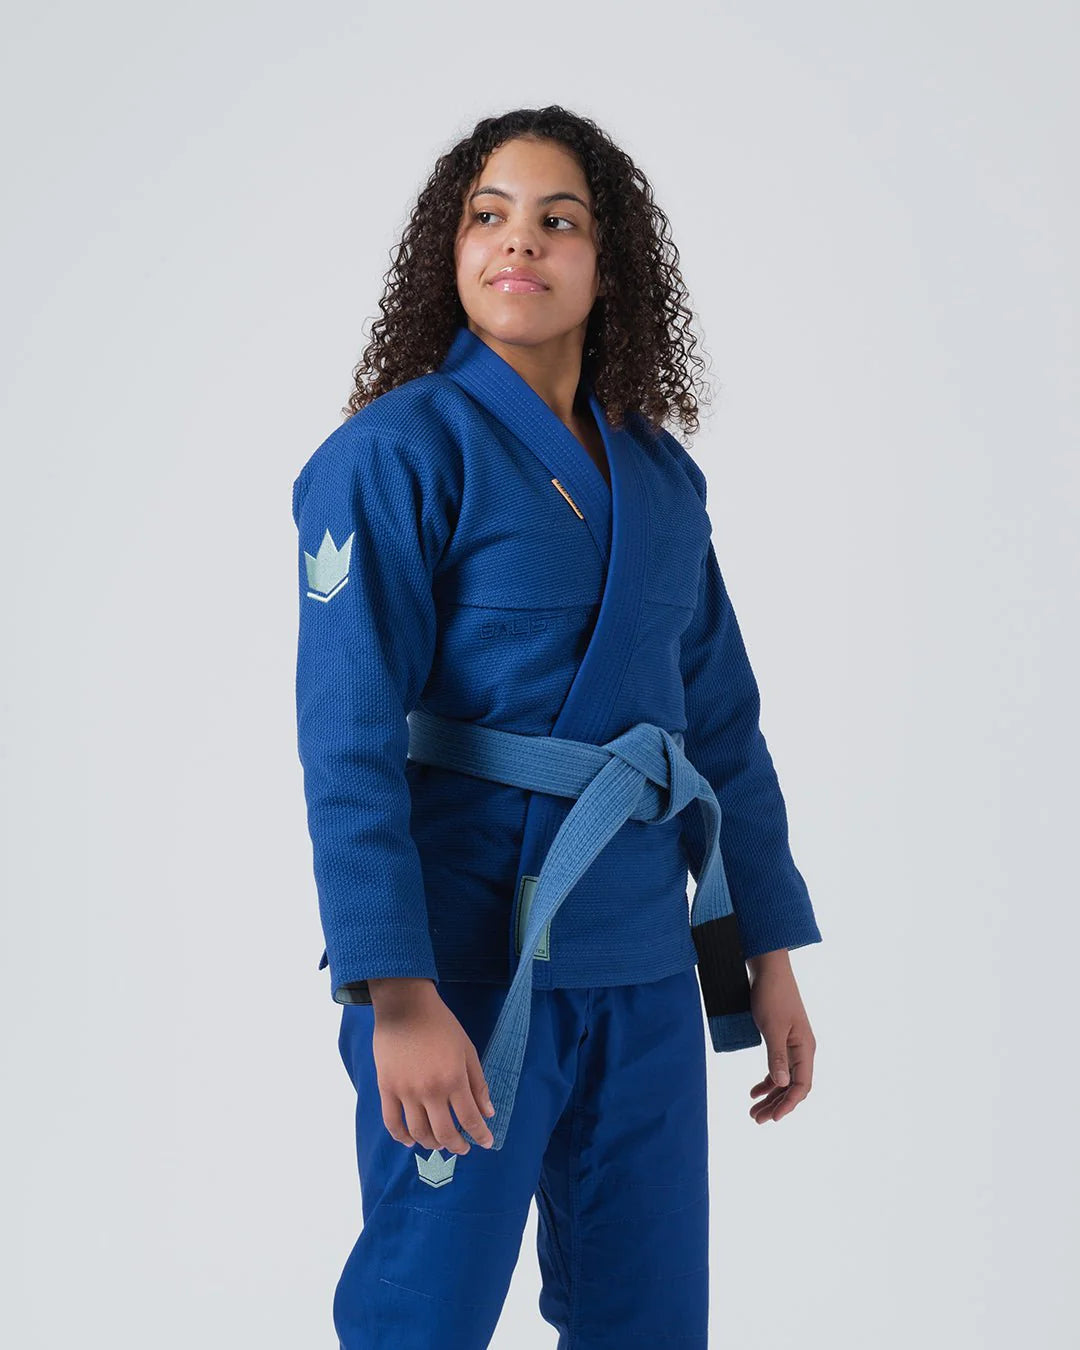 Balistico 4.0 Women's Jiu Jitsu Gi - Blue – KINGZ JAPAN